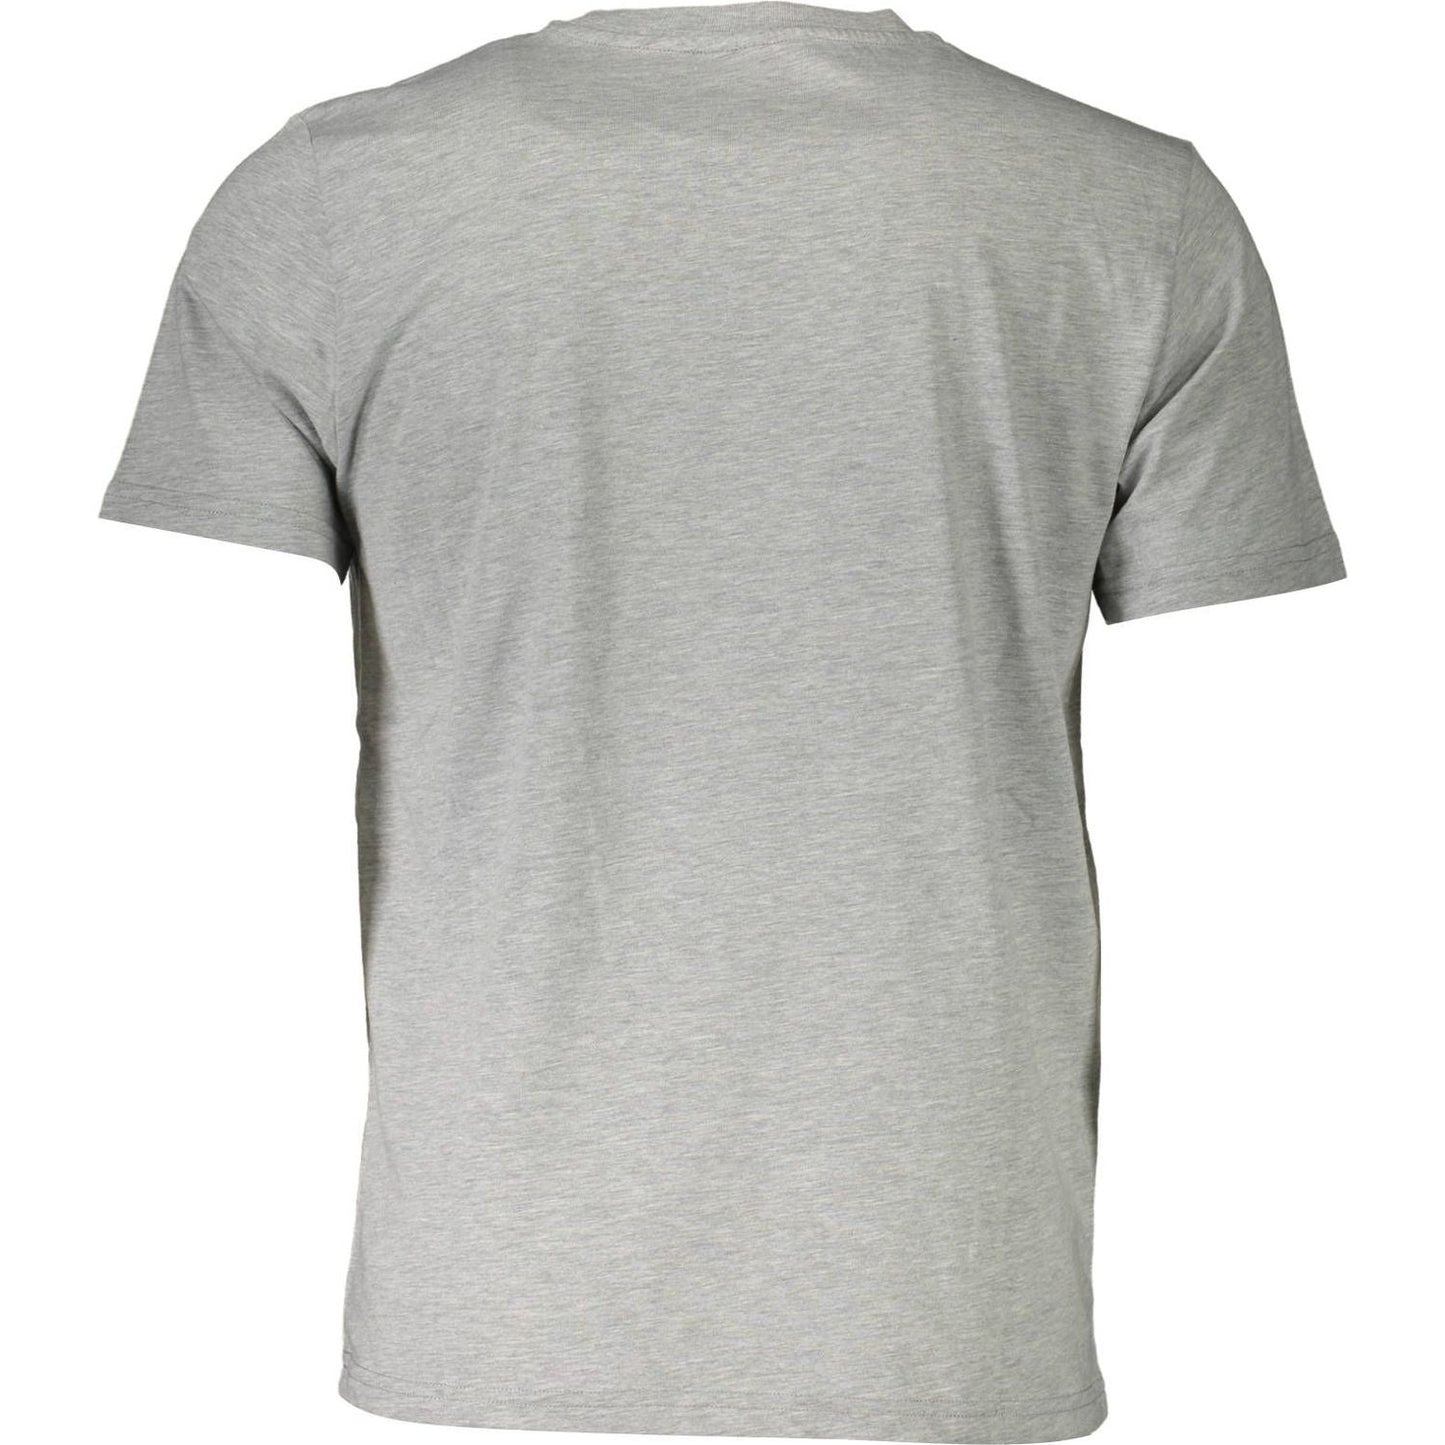 North Sails Sleek Gray Cotton T-Shirt with Iconic Print sleek-gray-cotton-t-shirt-with-iconic-print